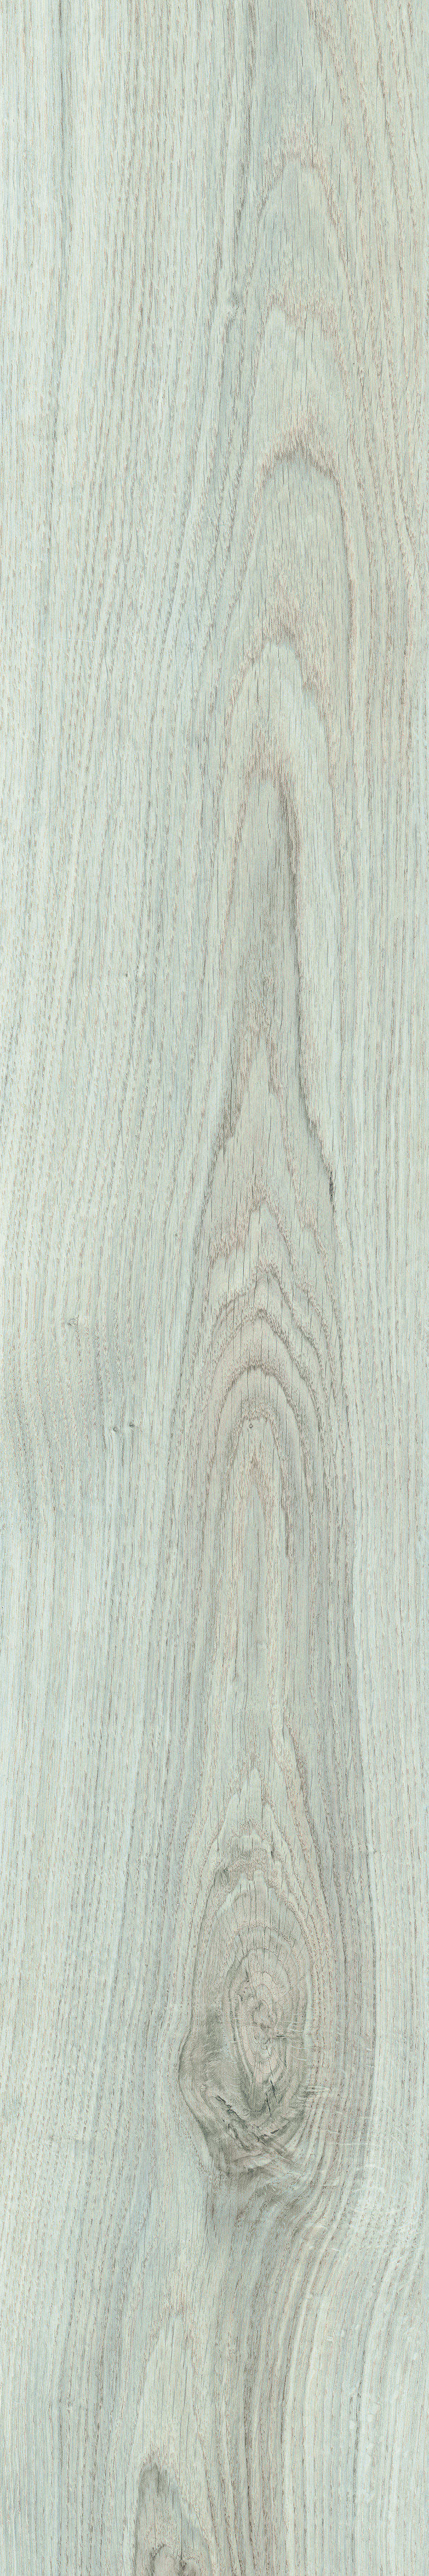 0-md bl wood bianco.jpg